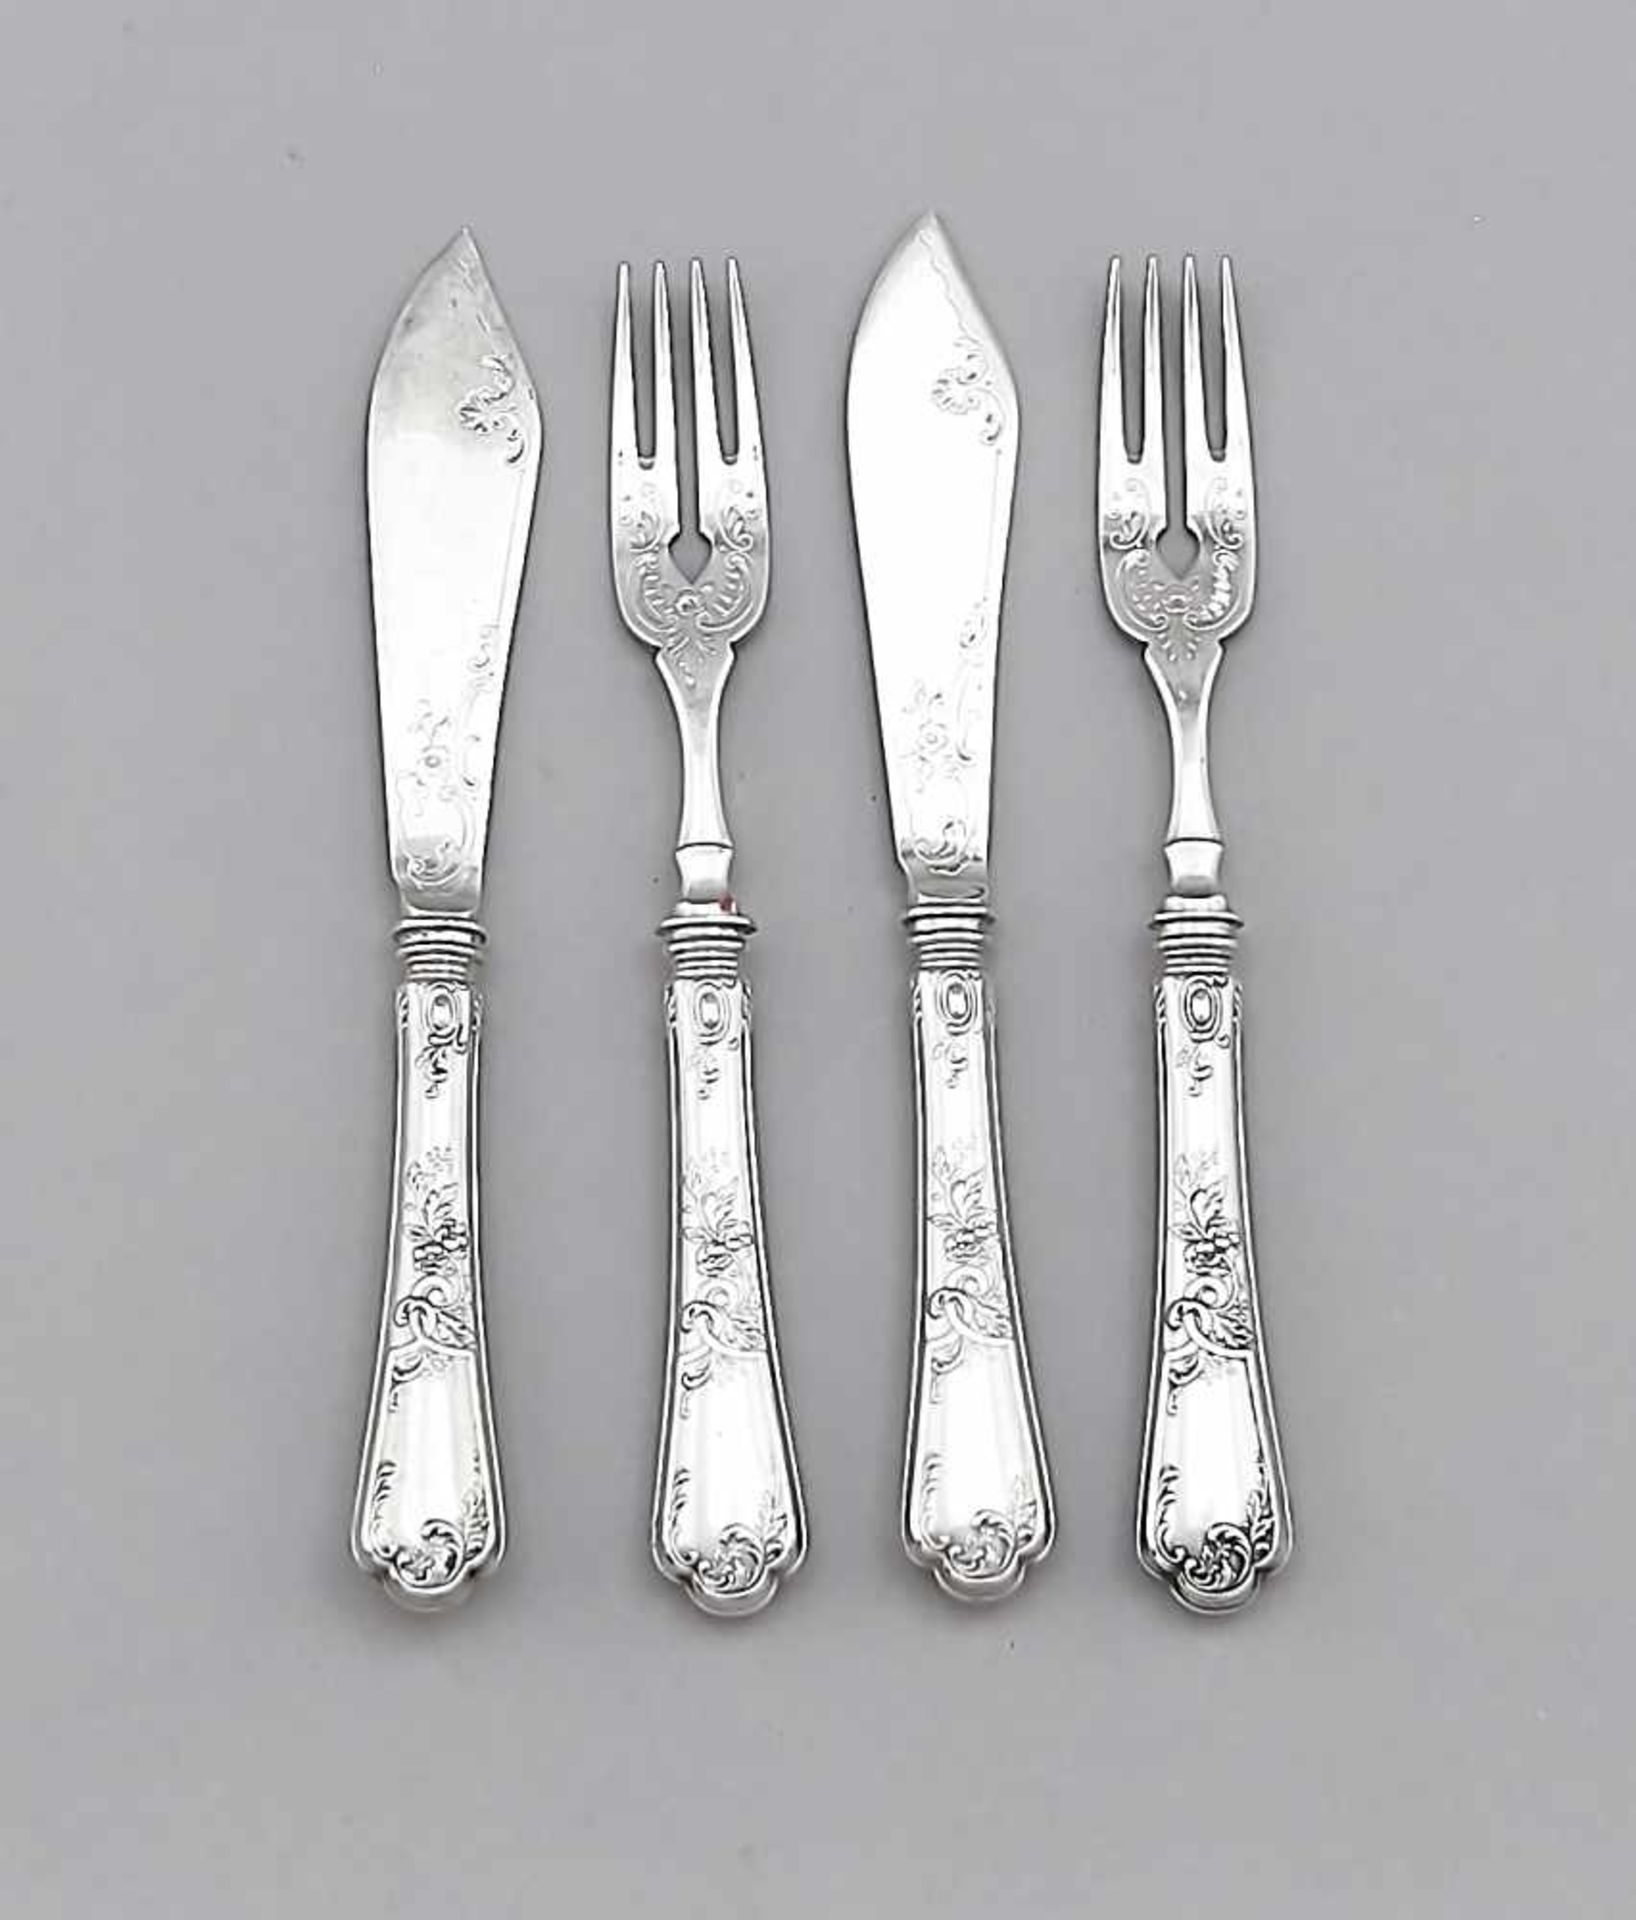 Fish cutlery for nine persons, German, 20th cent., hallmarked Koch & Bergfeld, Bremen,